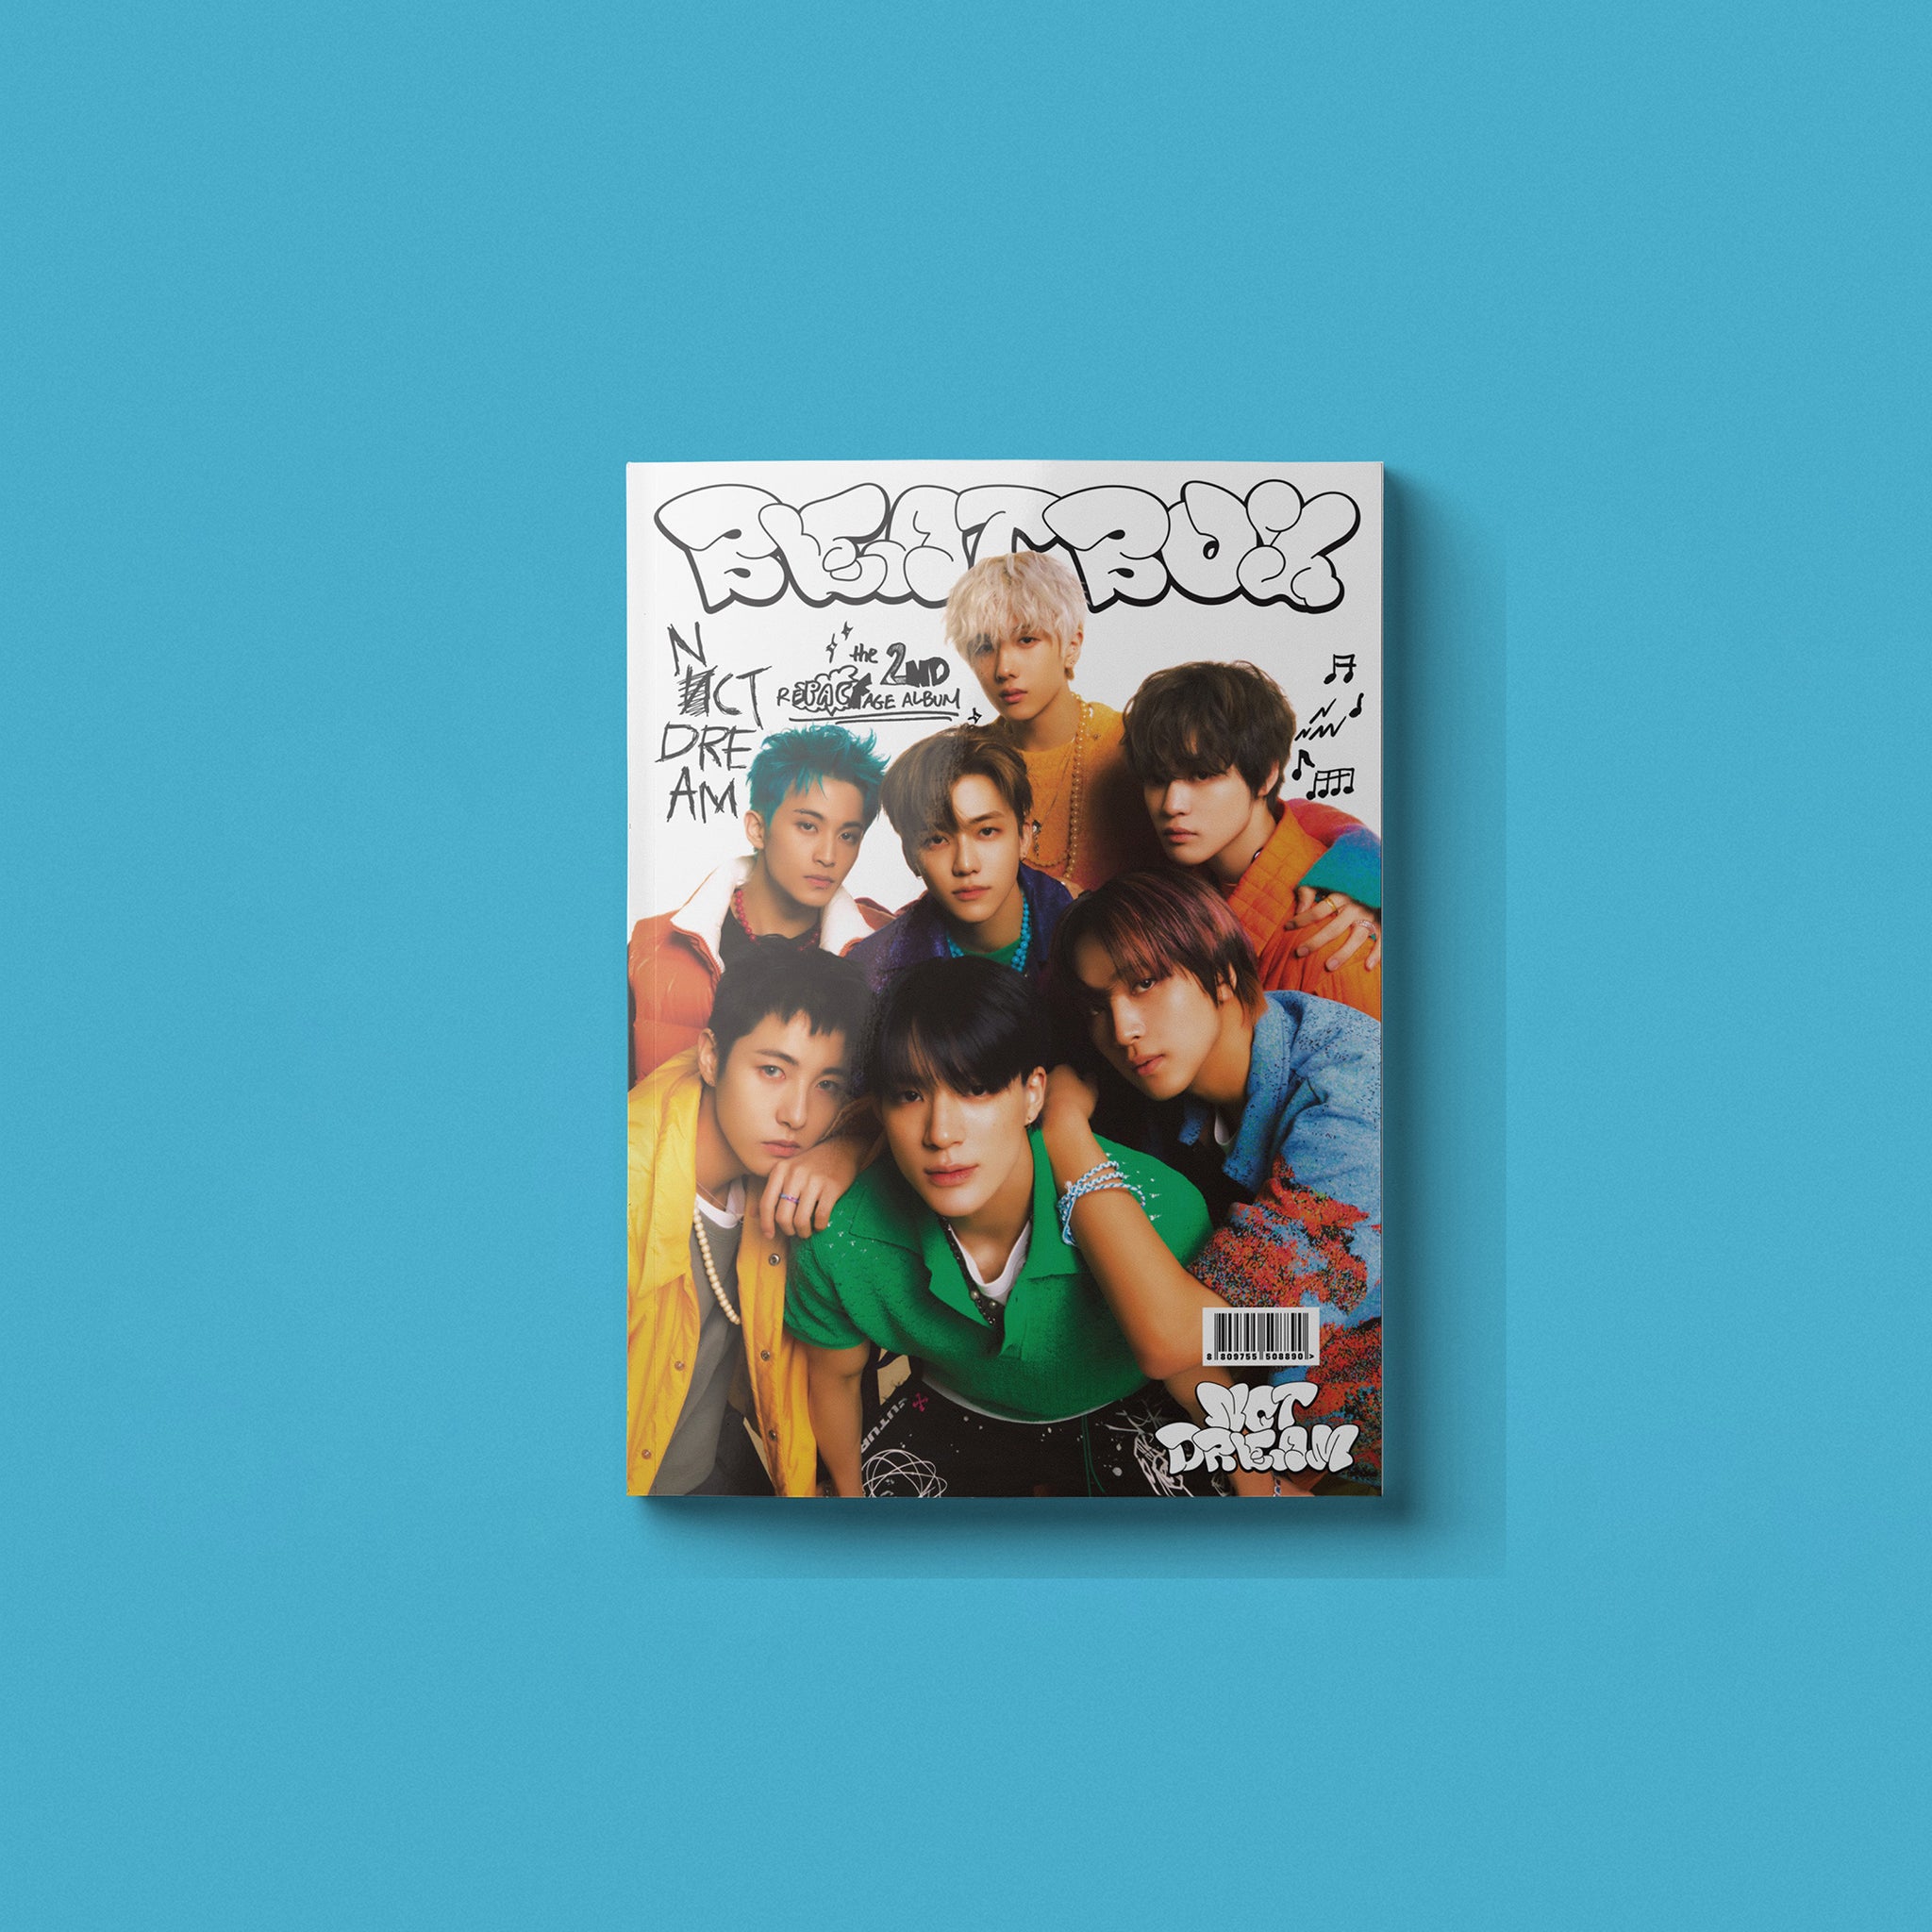 NCT DREAM 2ND ALBUM REPACKAGE 'BEATBOX' (PHOTOBOOK) NEW SCHOOL VERSION COVER